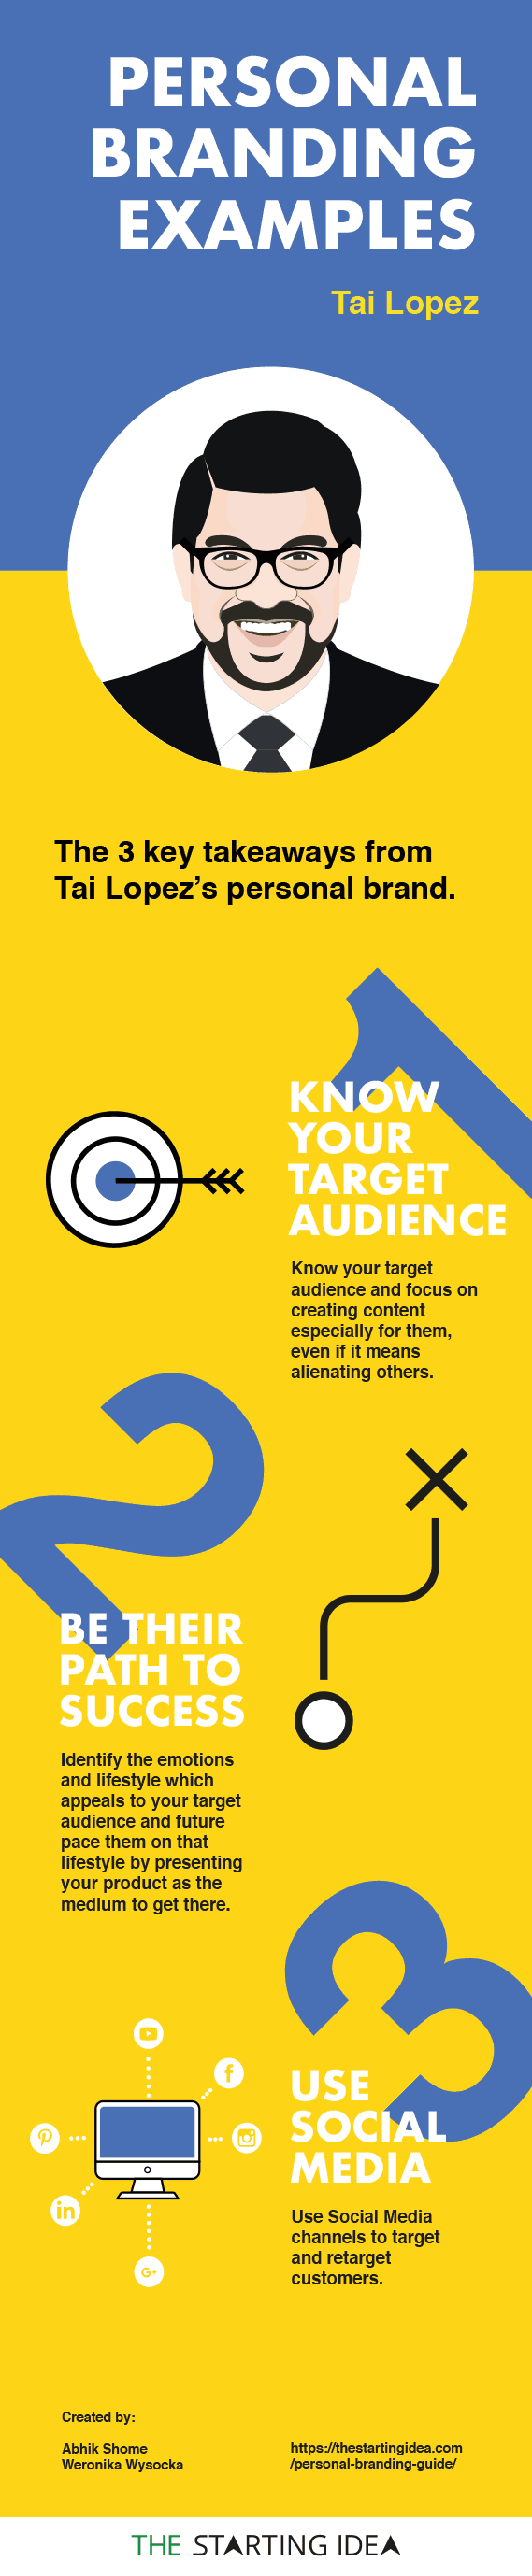 Tai Lopez personal branding examples infographic